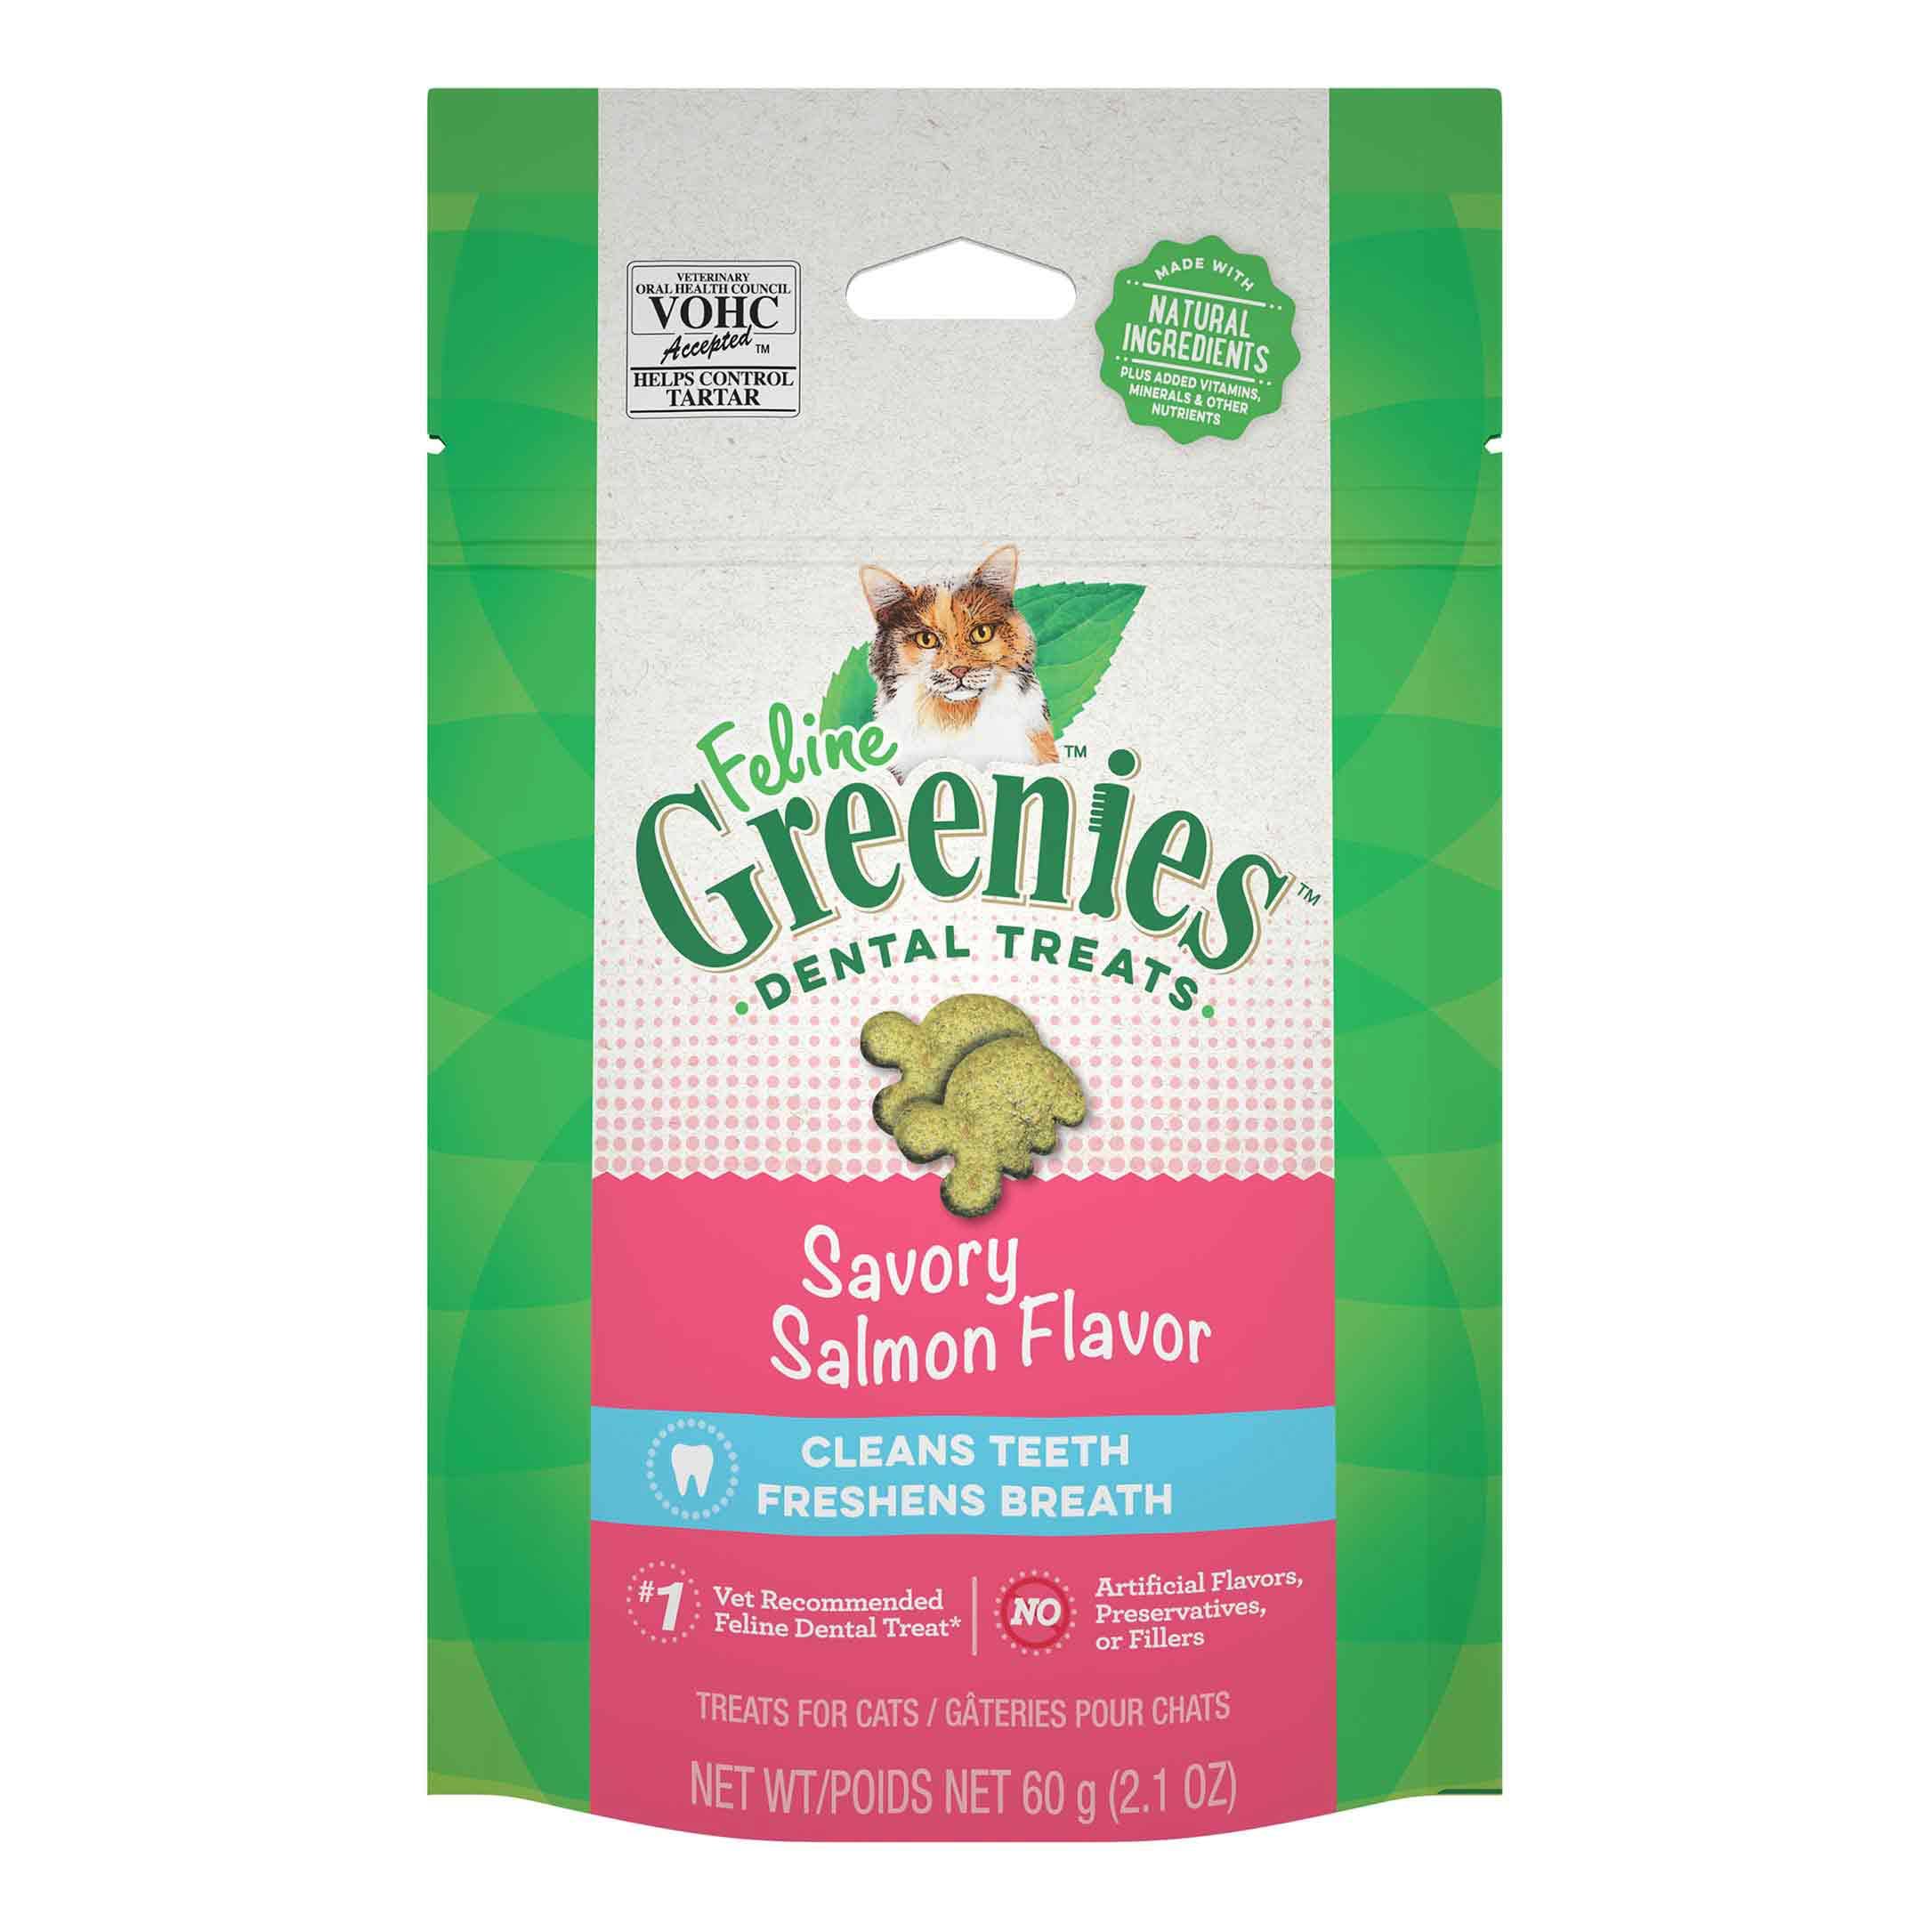 Feline Greenies Dental Cat Treats, Savory Salmon Flavor, 2.1 oz Pouch